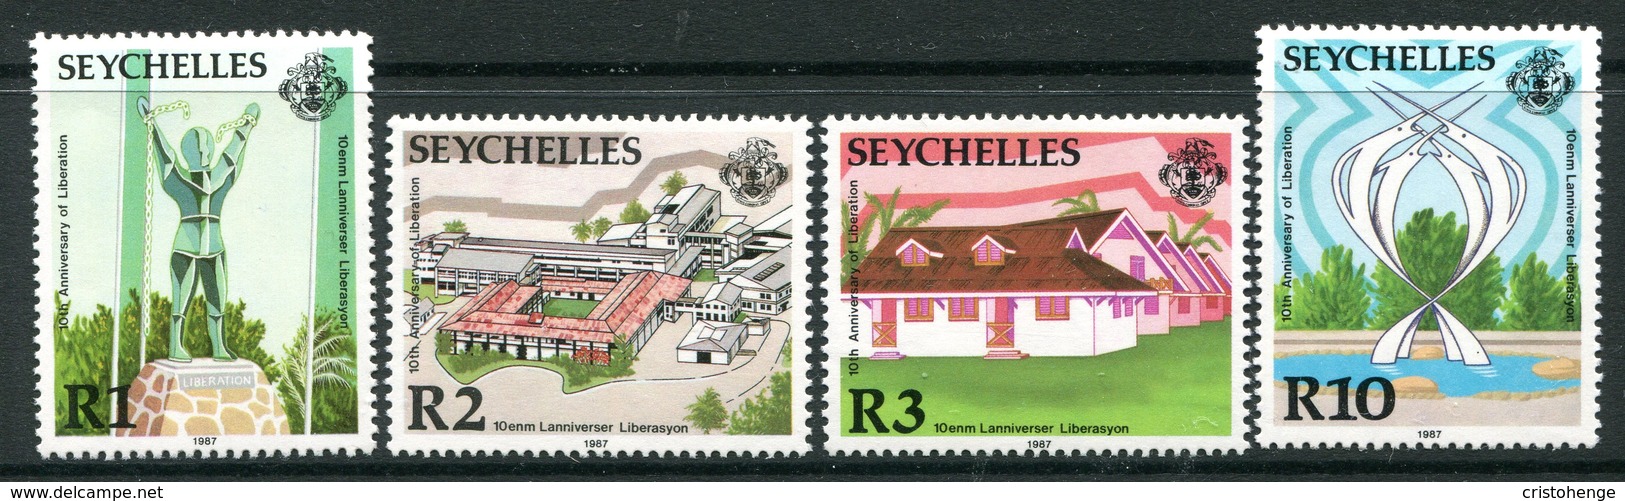 Seychelles 1987 Tenth Anniversary Of Liberation Set MNH (SG 667-670) - Seychelles (1976-...)